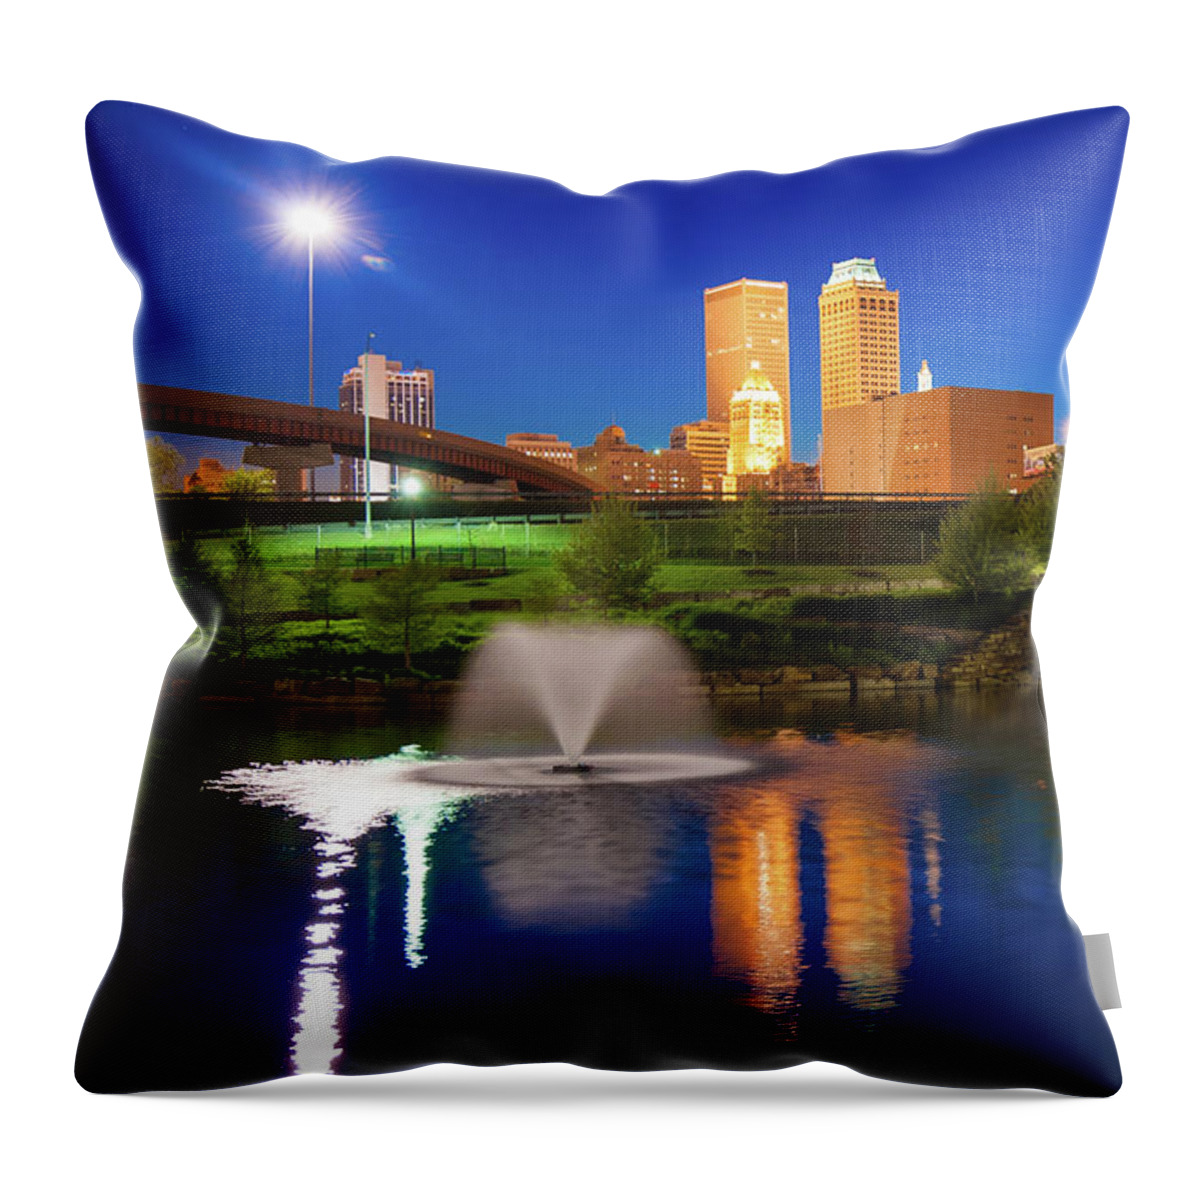 Tulsa Skyline Throw Pillow featuring the photograph Tulsa Oklahoma at Dawn - Centennial Park View by Gregory Ballos